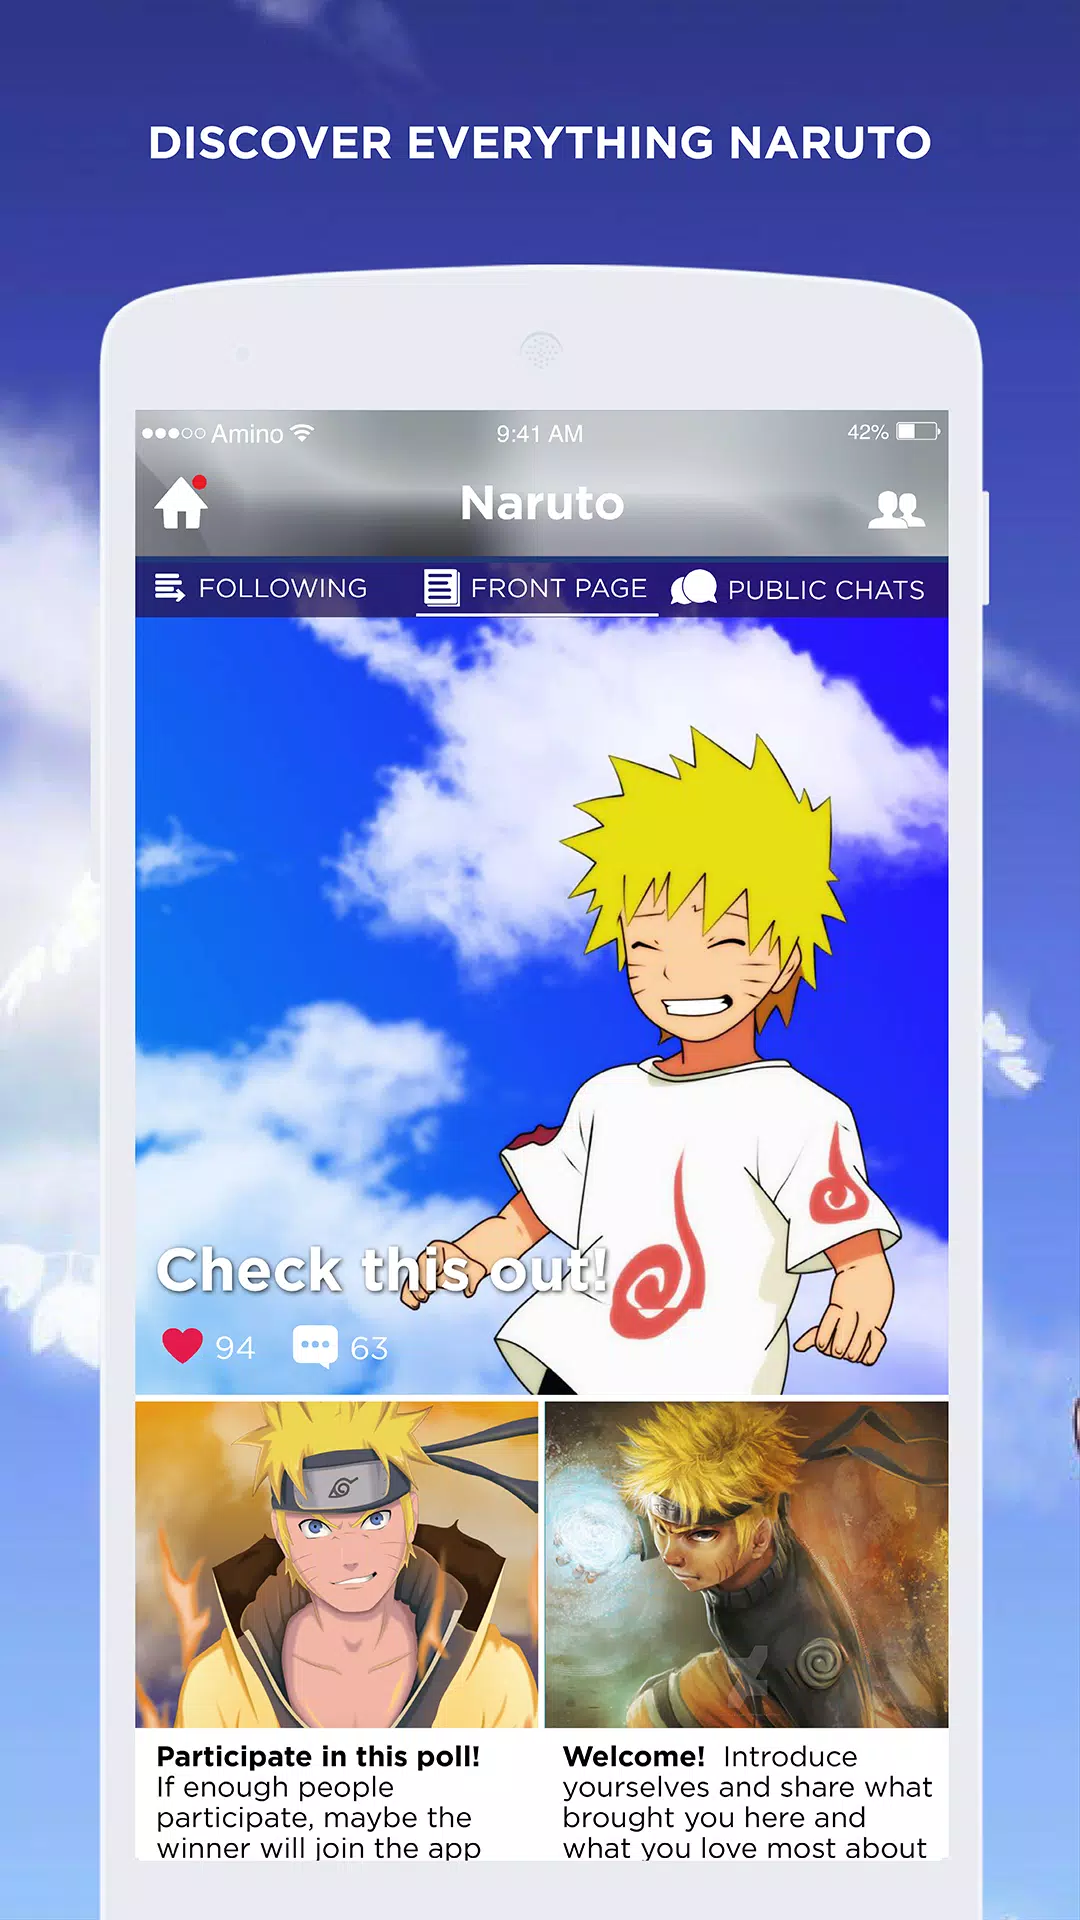 App para baixar Eps.  Naruto Shippuden Online Amino